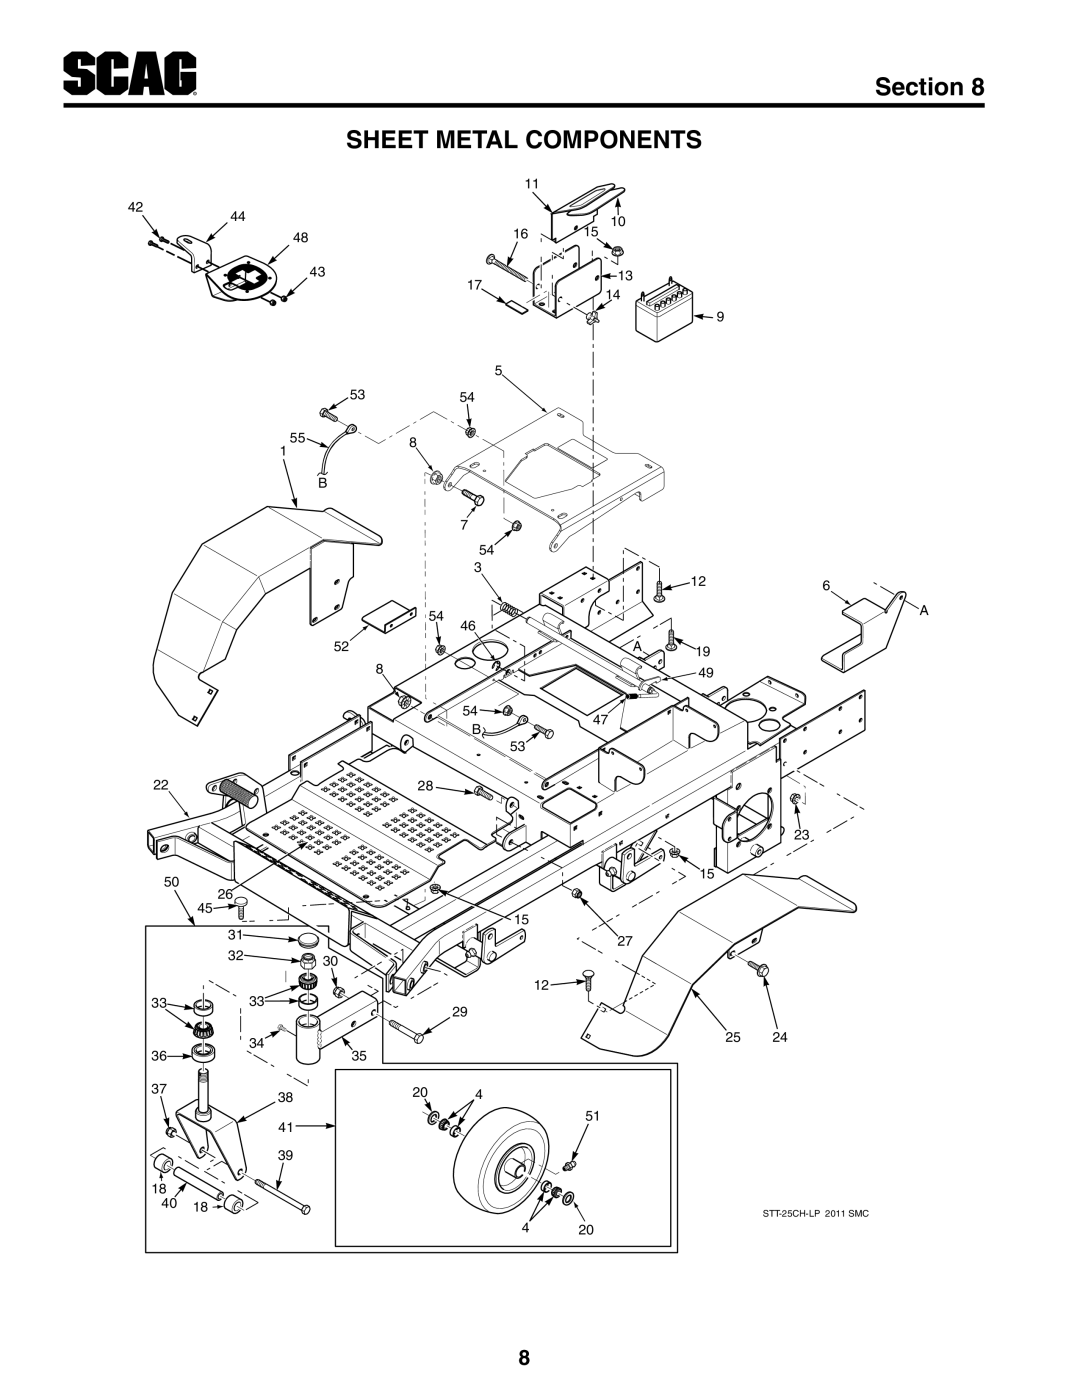 Scag Power Equipment STT-25CH-LP manual Sheet Metal Components, Section 